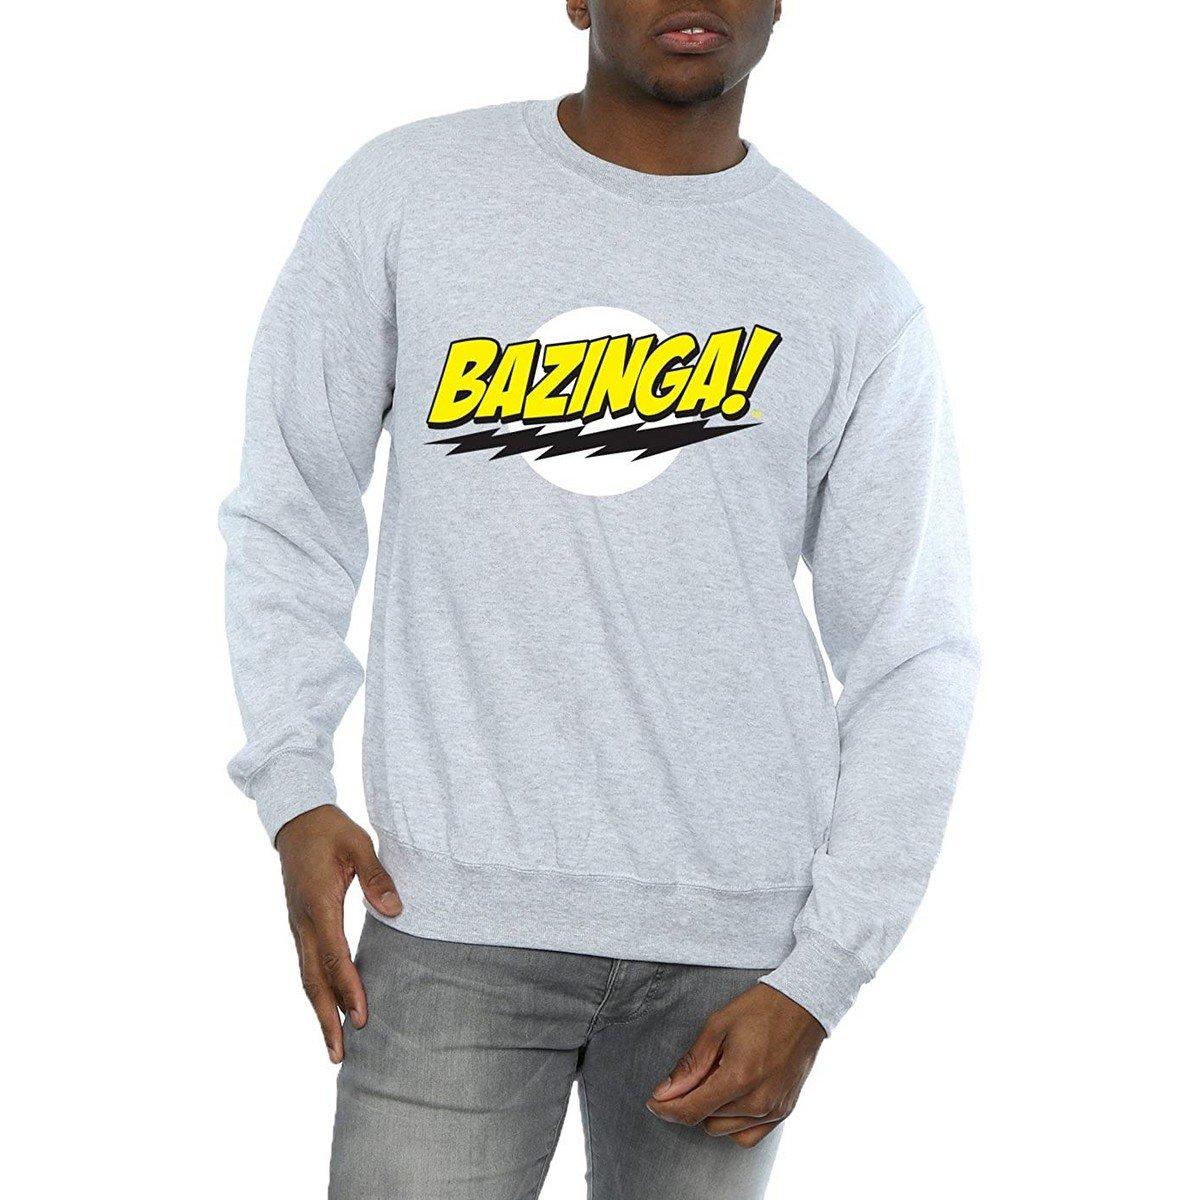 Bazinga Sweatshirt Herren Grau XXL von The Big Bang Theory